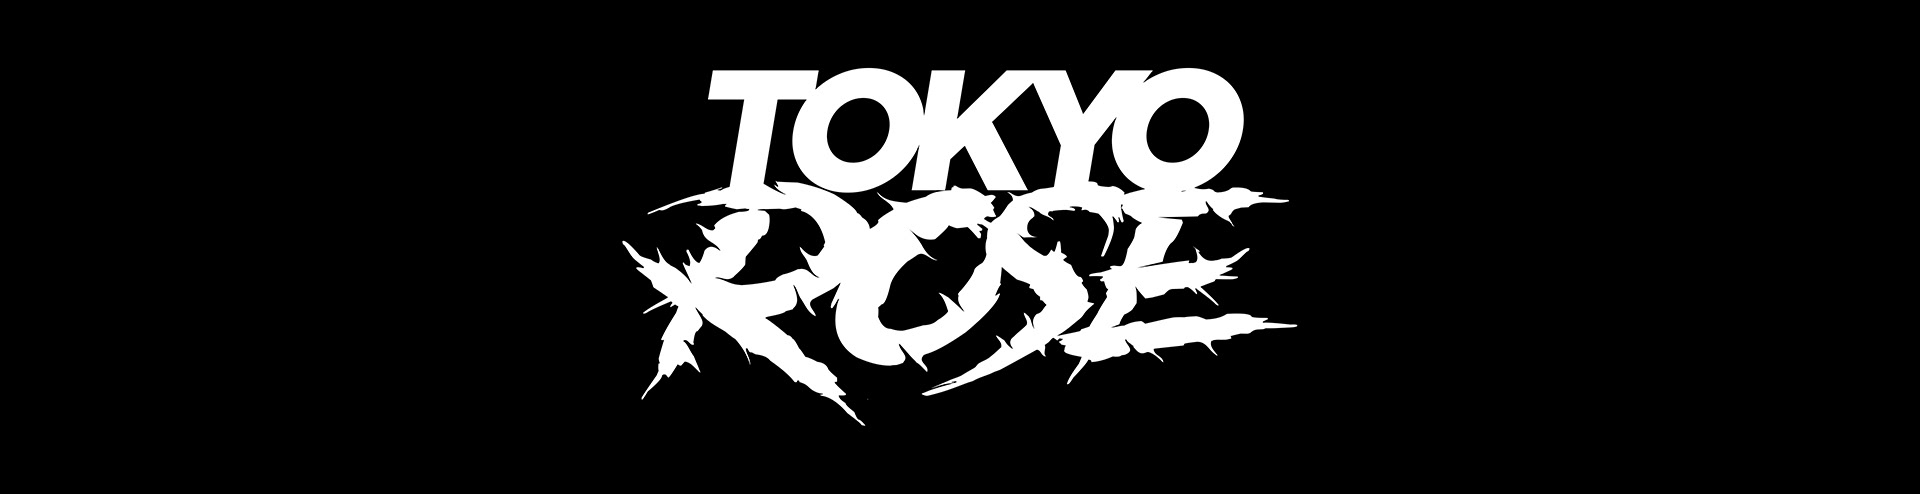 CLIP TOKYO ROSE on Behance5cac7992230149.5e45a8b437948.jpg